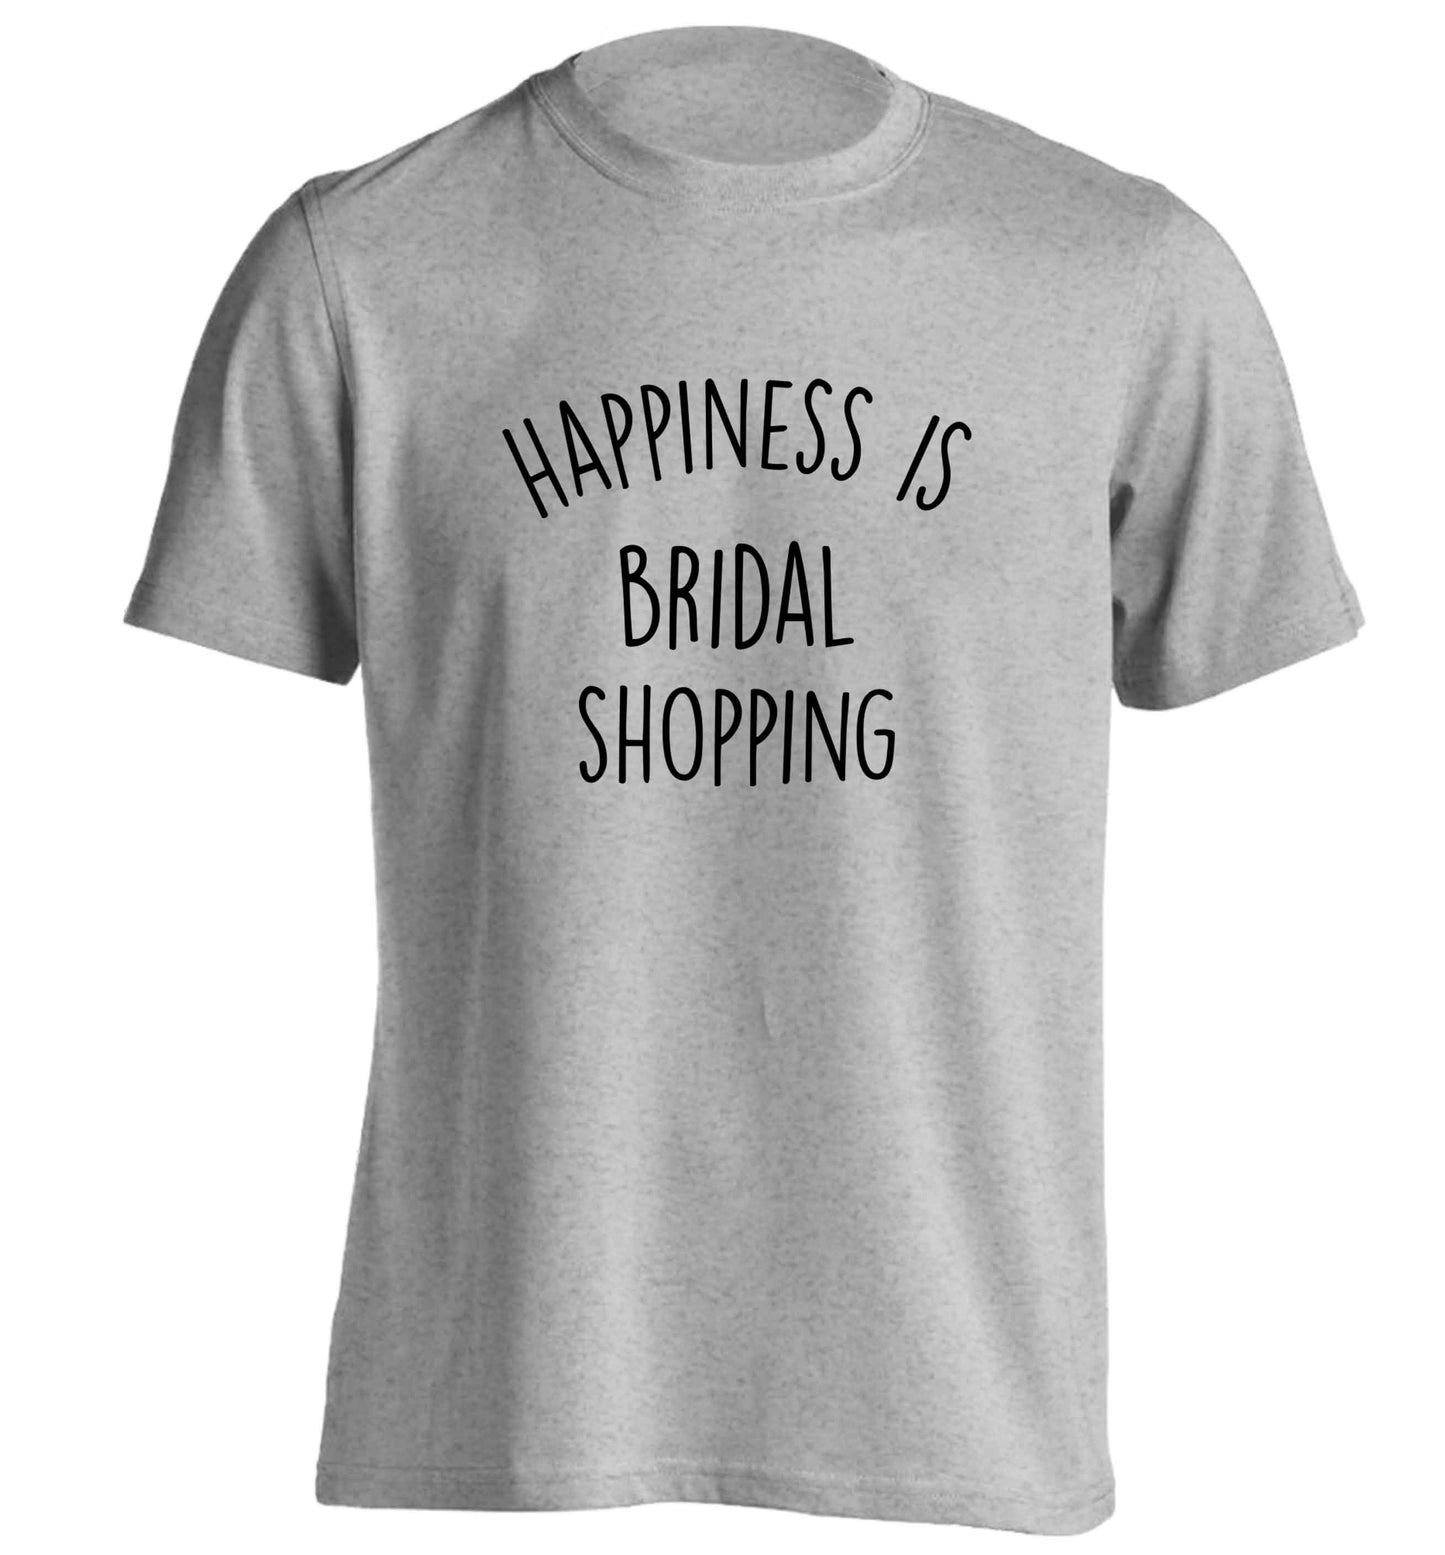 Happiness is bridal shopping adults unisex grey Tshirt 2XL